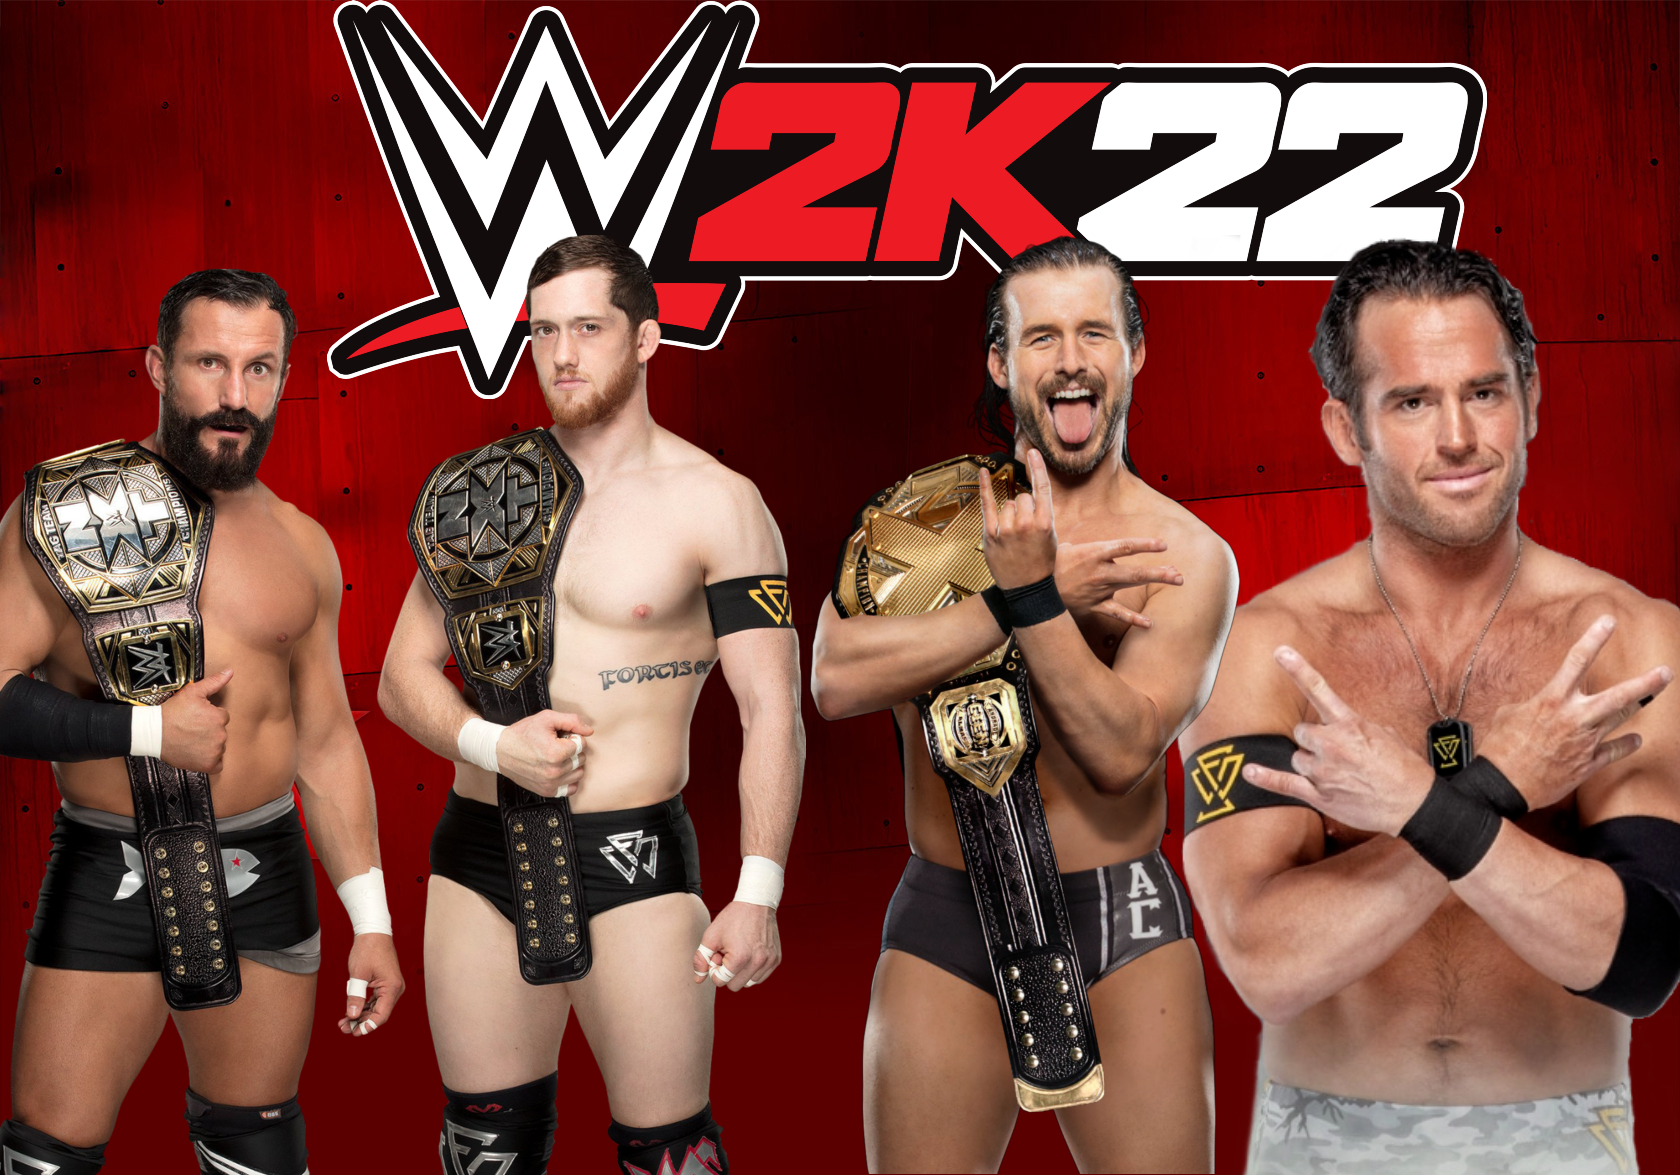 WWE 2k22 Game For PC Full Version